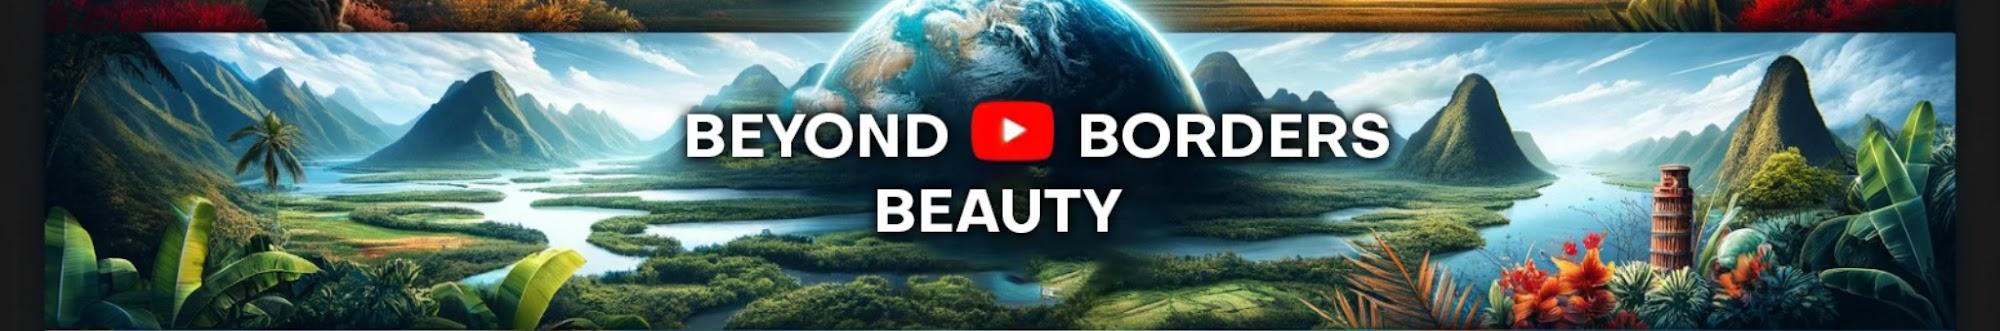 Beyond Borders Beauty